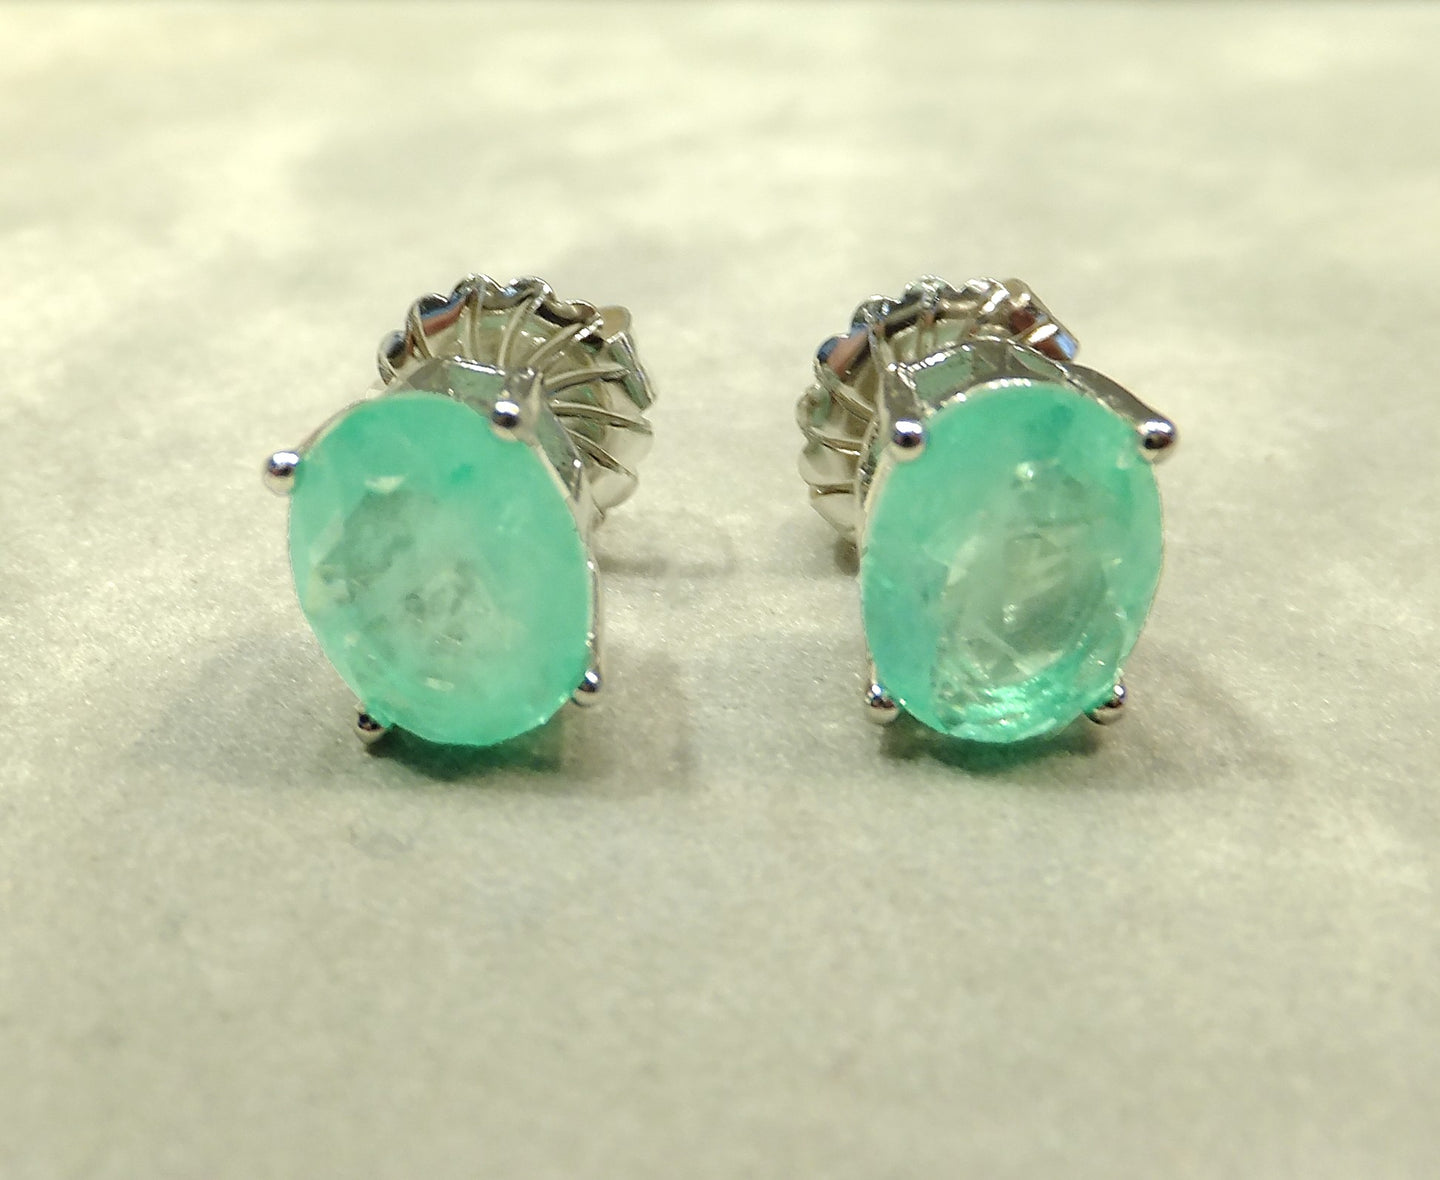 Oval mint green Paraiba Tourmaline earrings